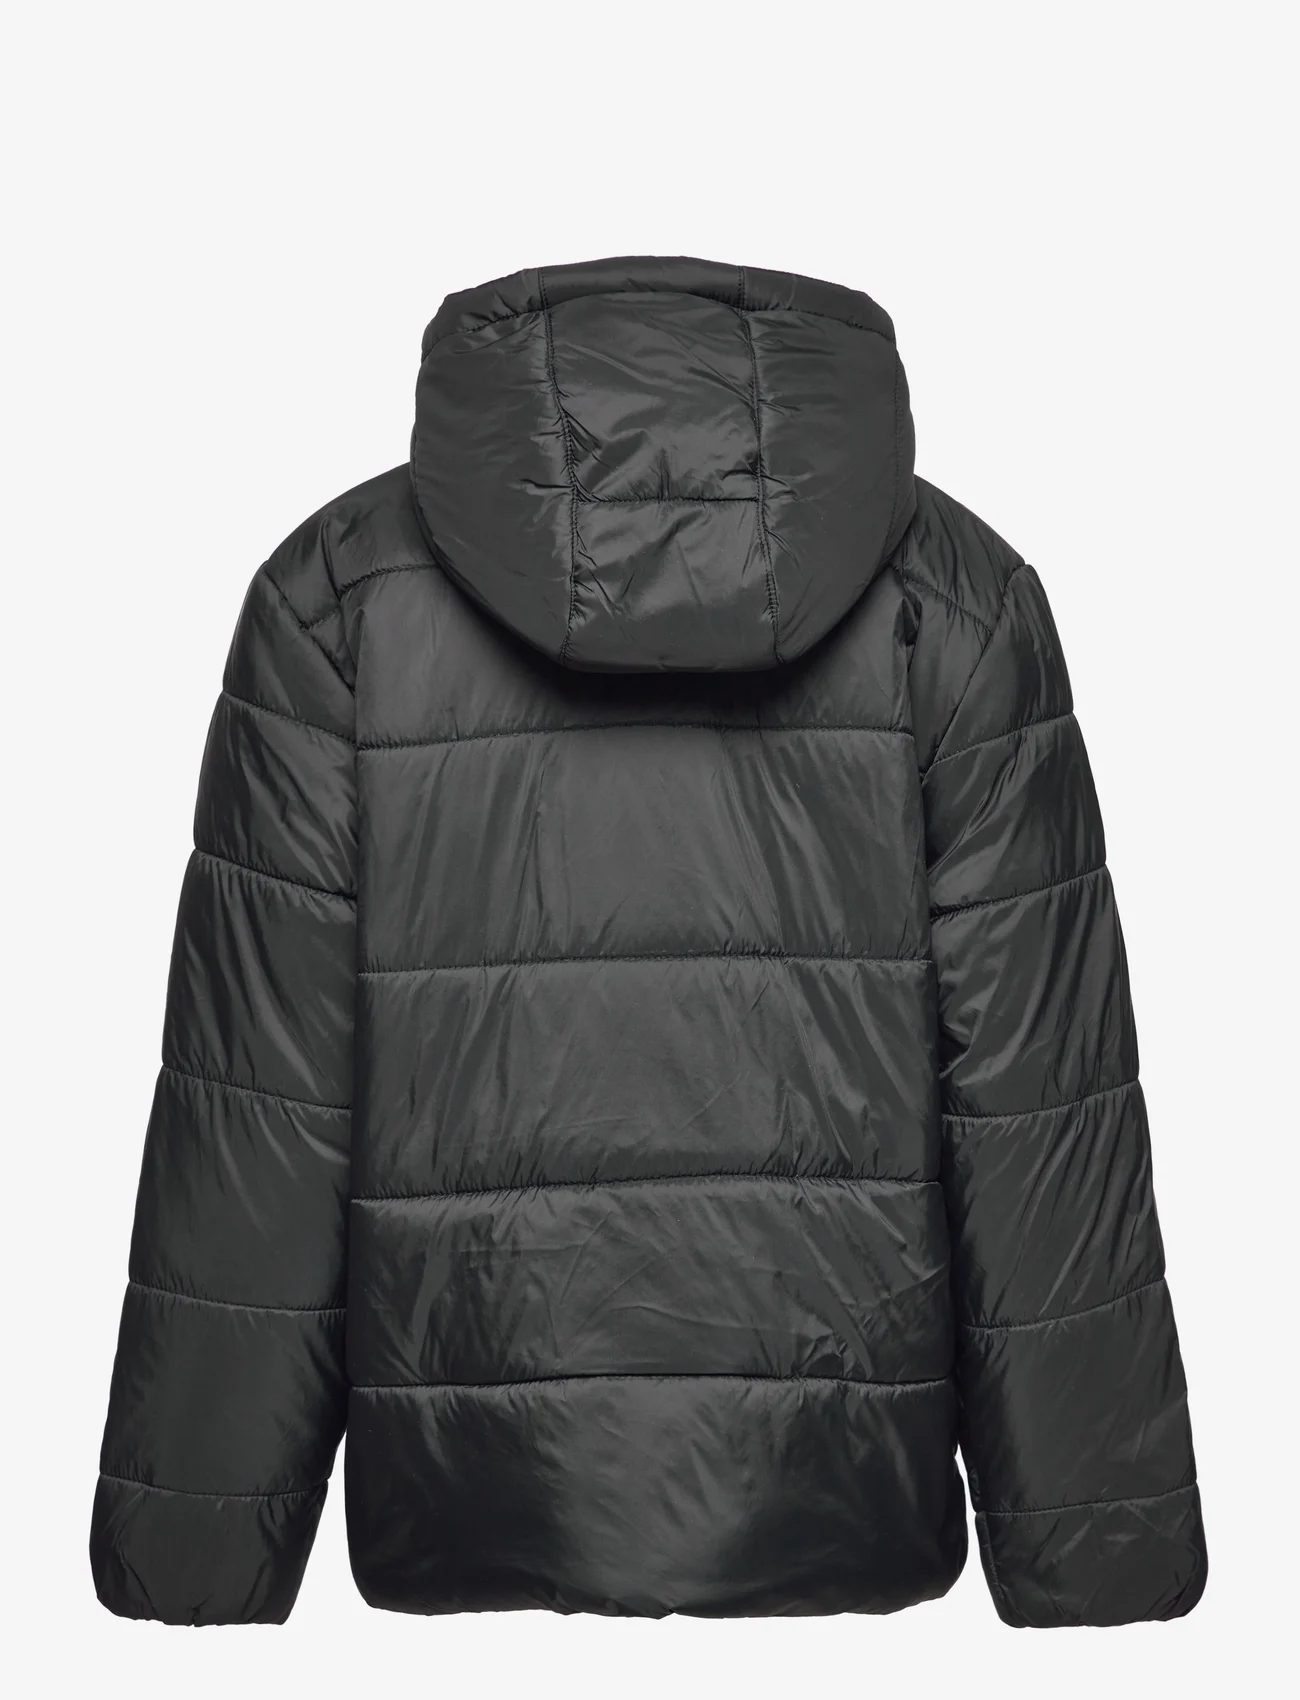 FILA - BUNIEL padded jacket - isolerte jakker - moonless night - 1